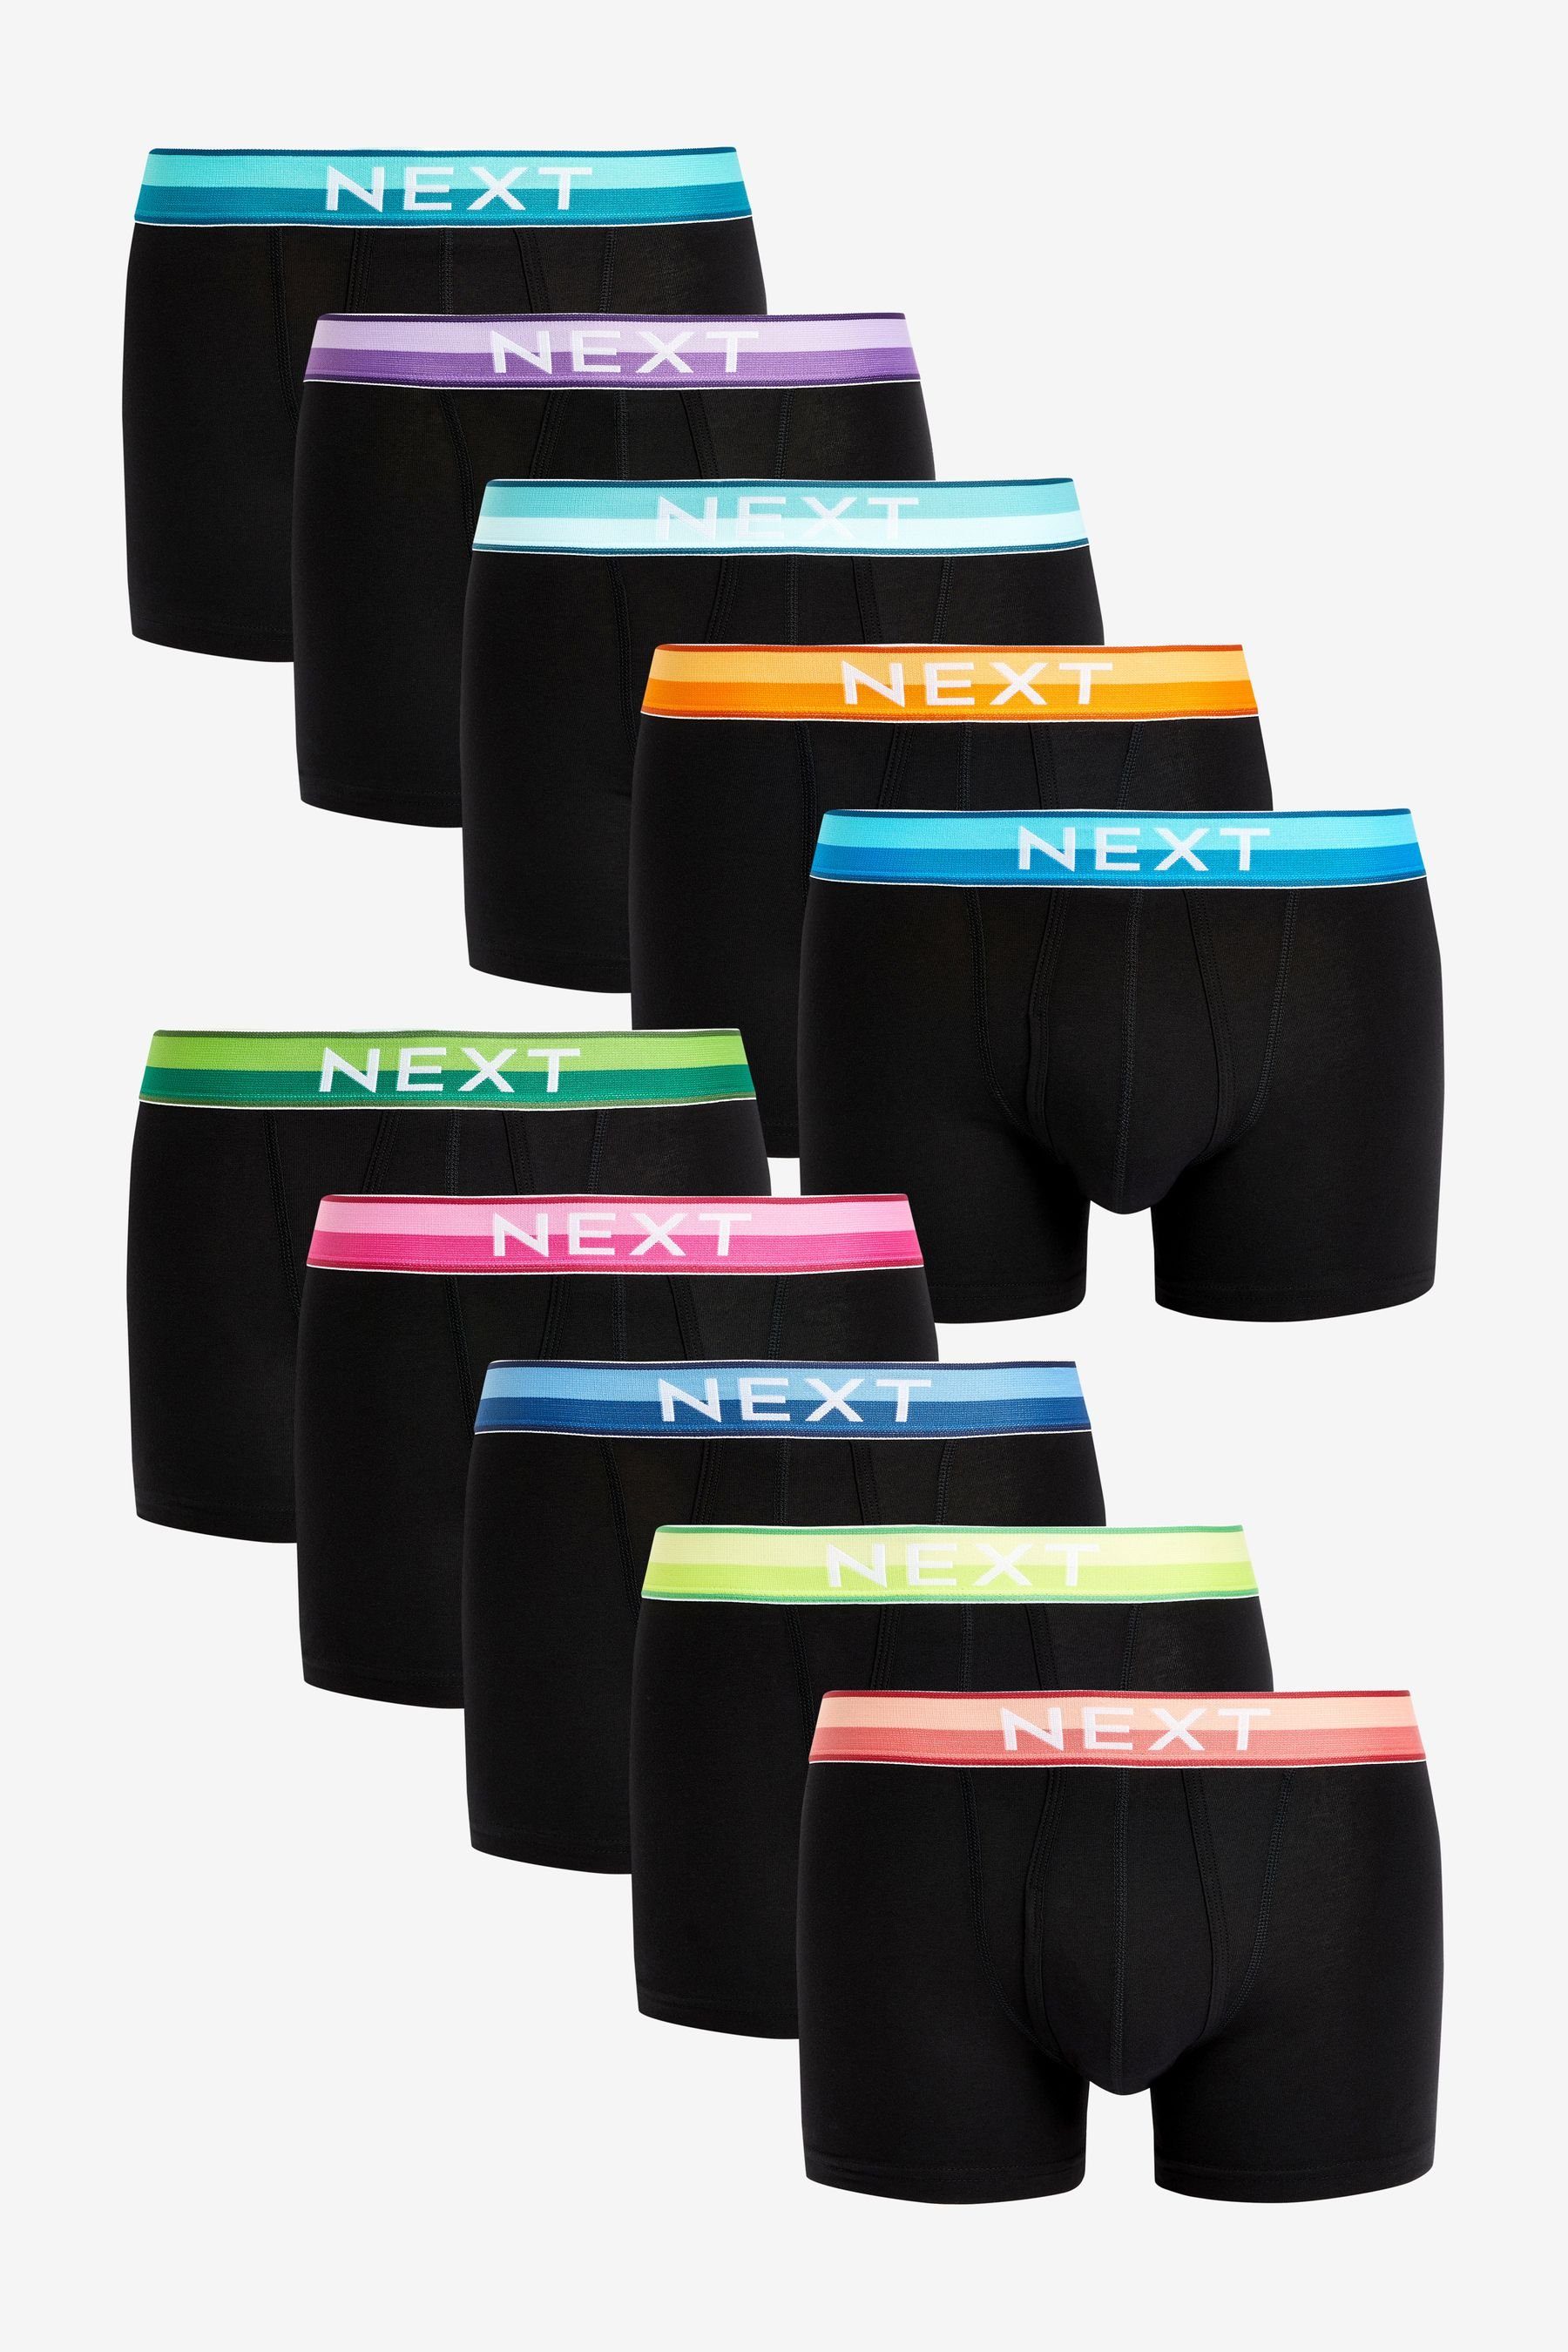 Next Boxershorts Boxershorts A-Front, 10er-Pack (10-St) Black Bright Colour Waistband